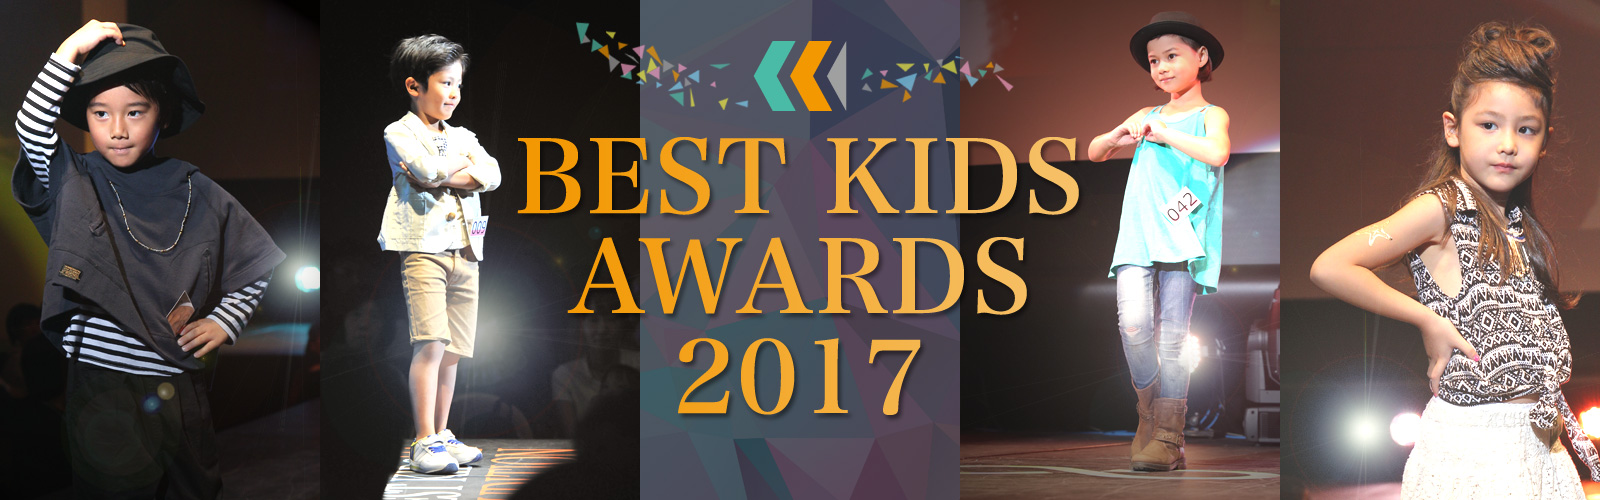 BEST KIDS AWARDS 2017